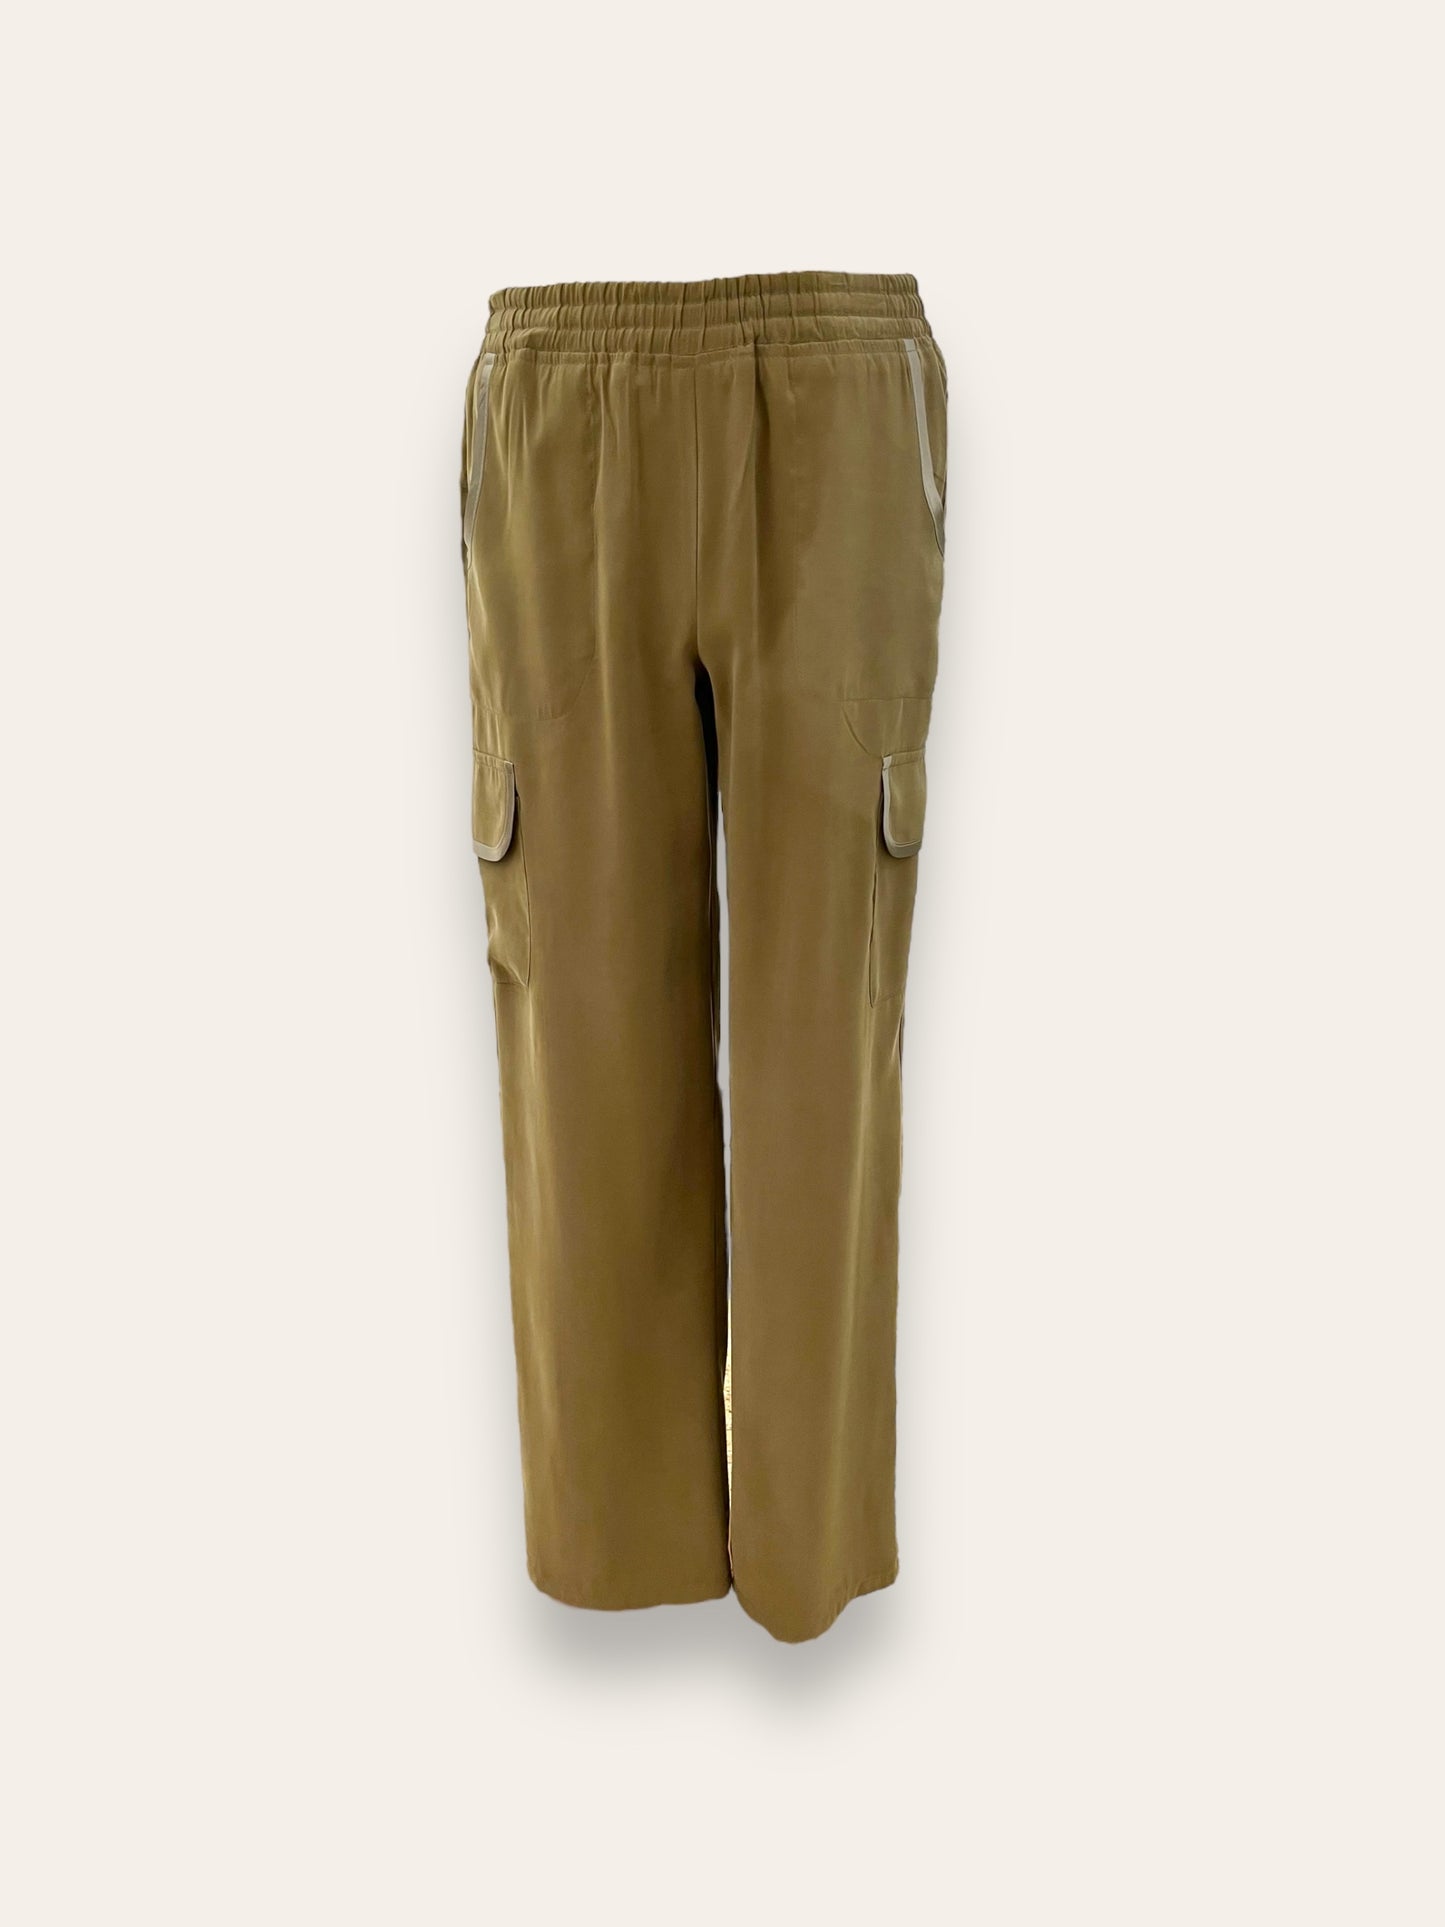 Pantalone Cargo Verde Militare Bordature In Raso